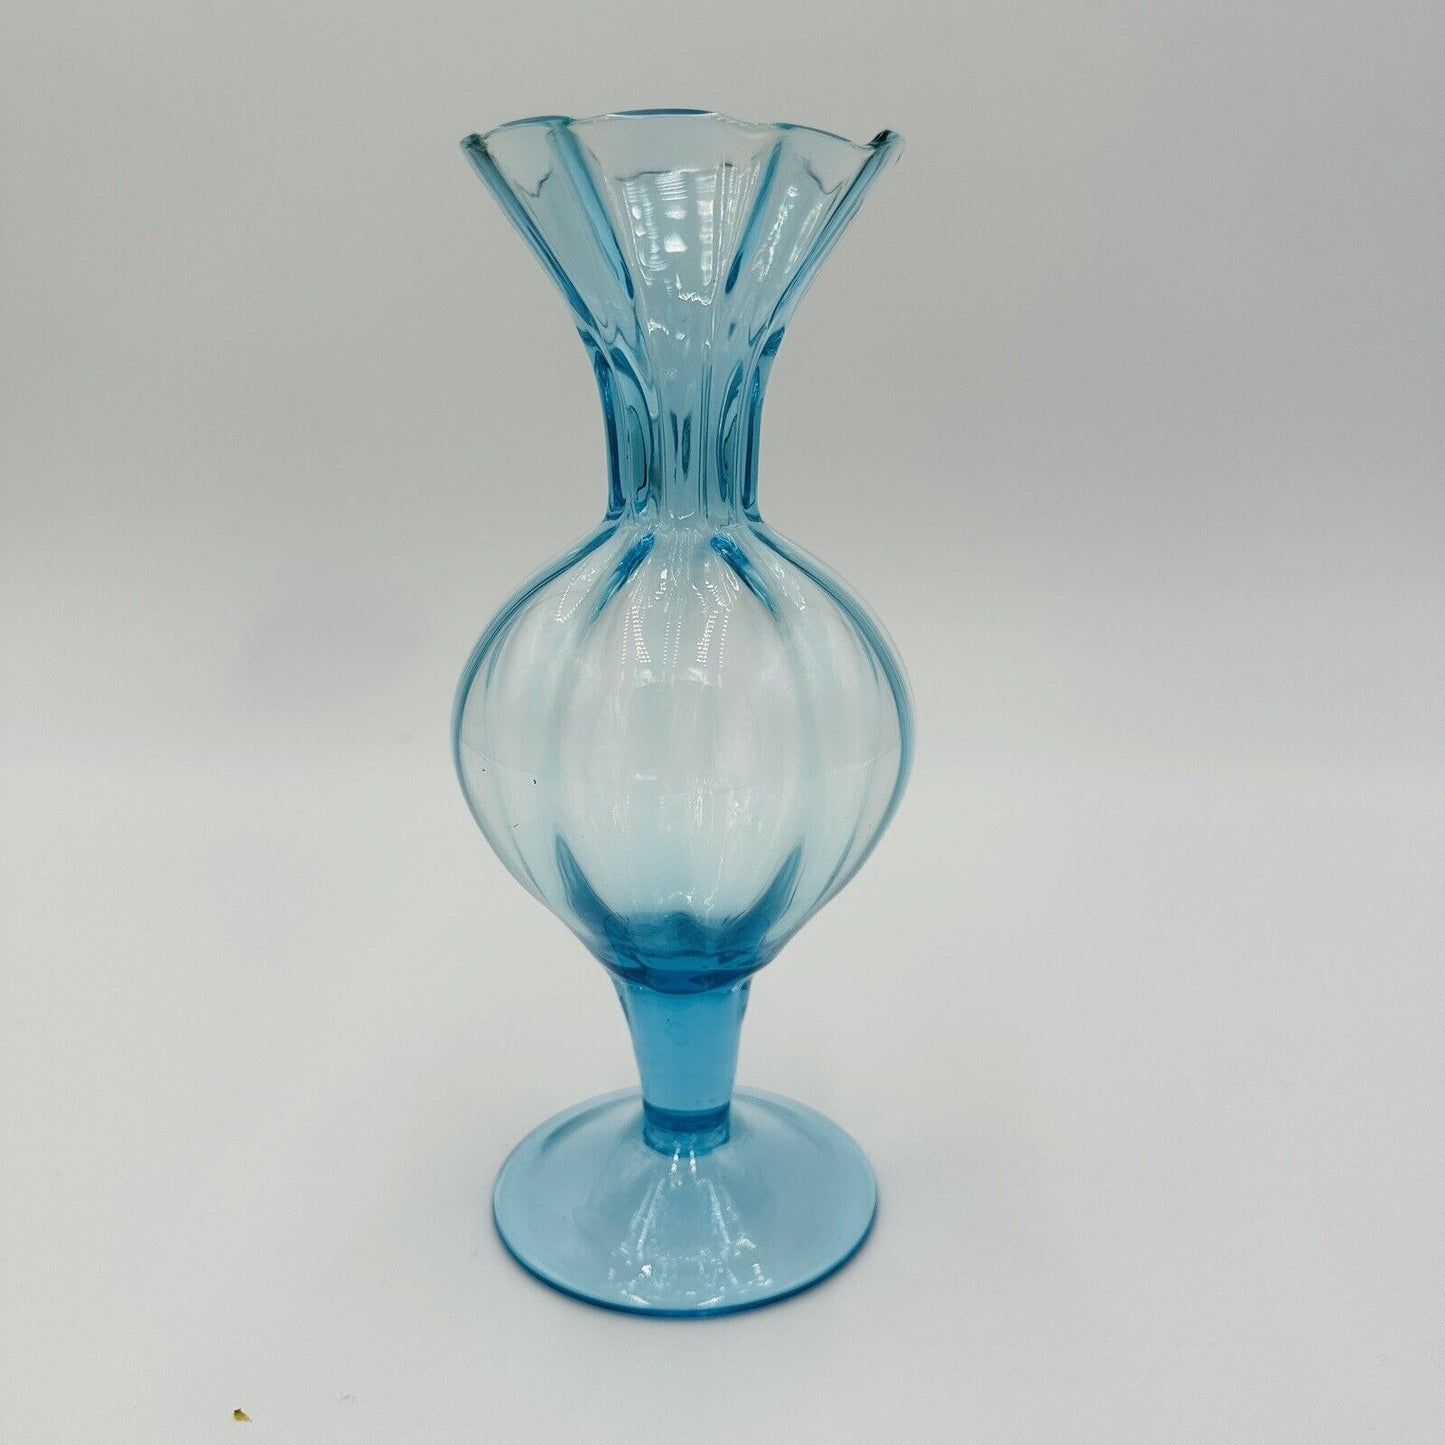 Napoleone Martinuzzi Bud Vase in the Manner of Blown Glass Blue Aqua Decor